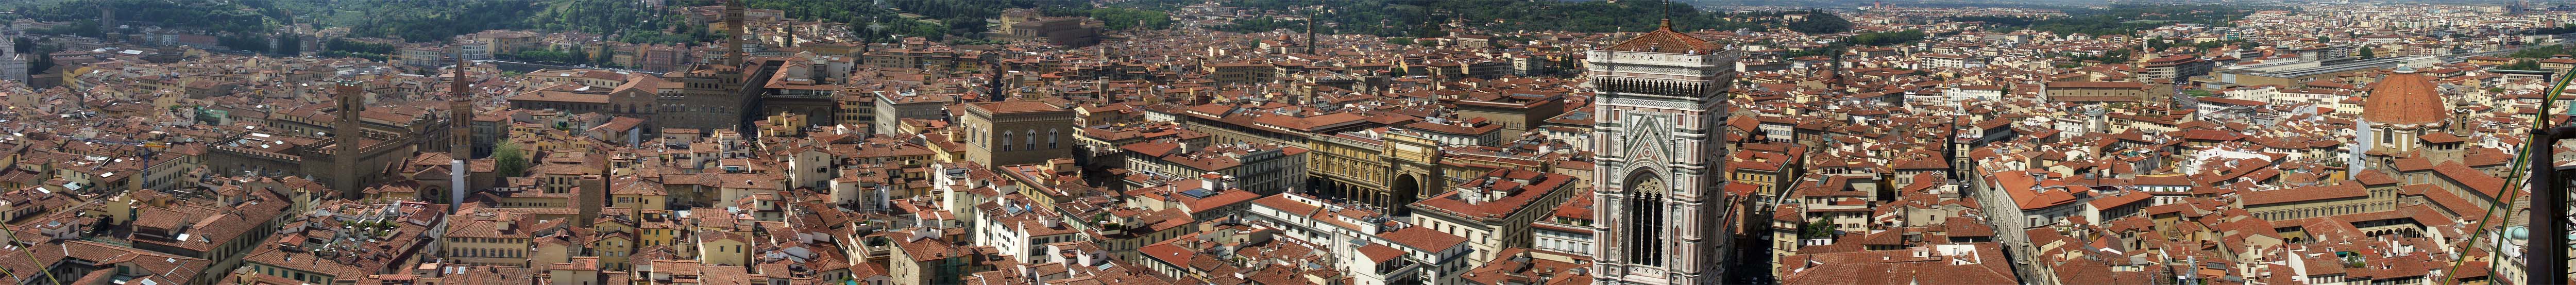 Florence city pano-2 copy.jpg